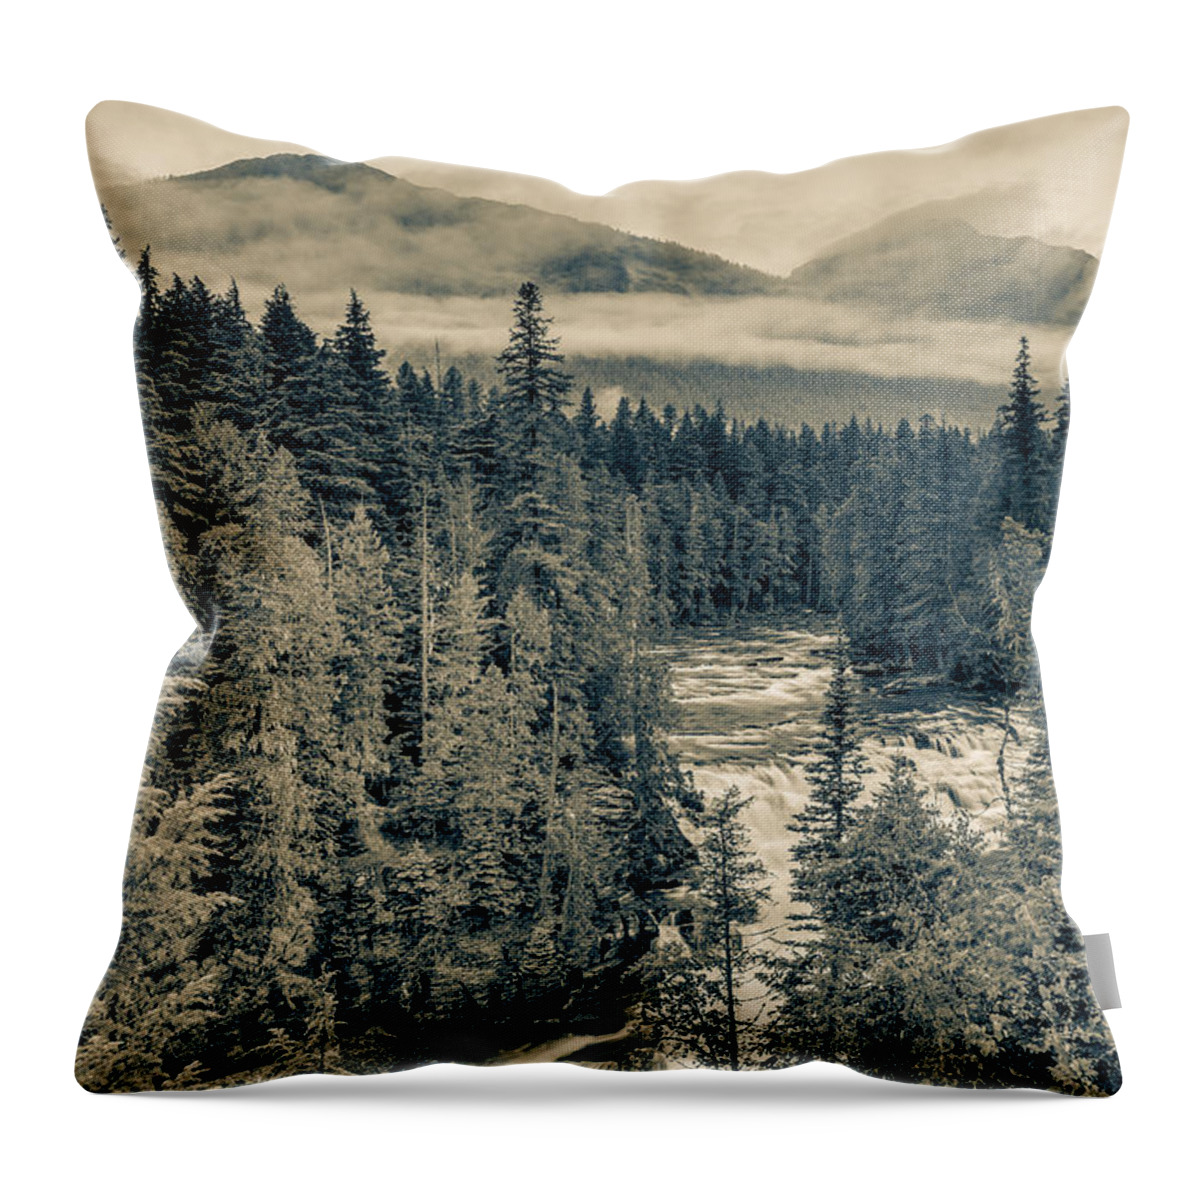 Glacier National Park Throw Pillow featuring the photograph McDonald Creek Vertical by Adam Mateo Fierro